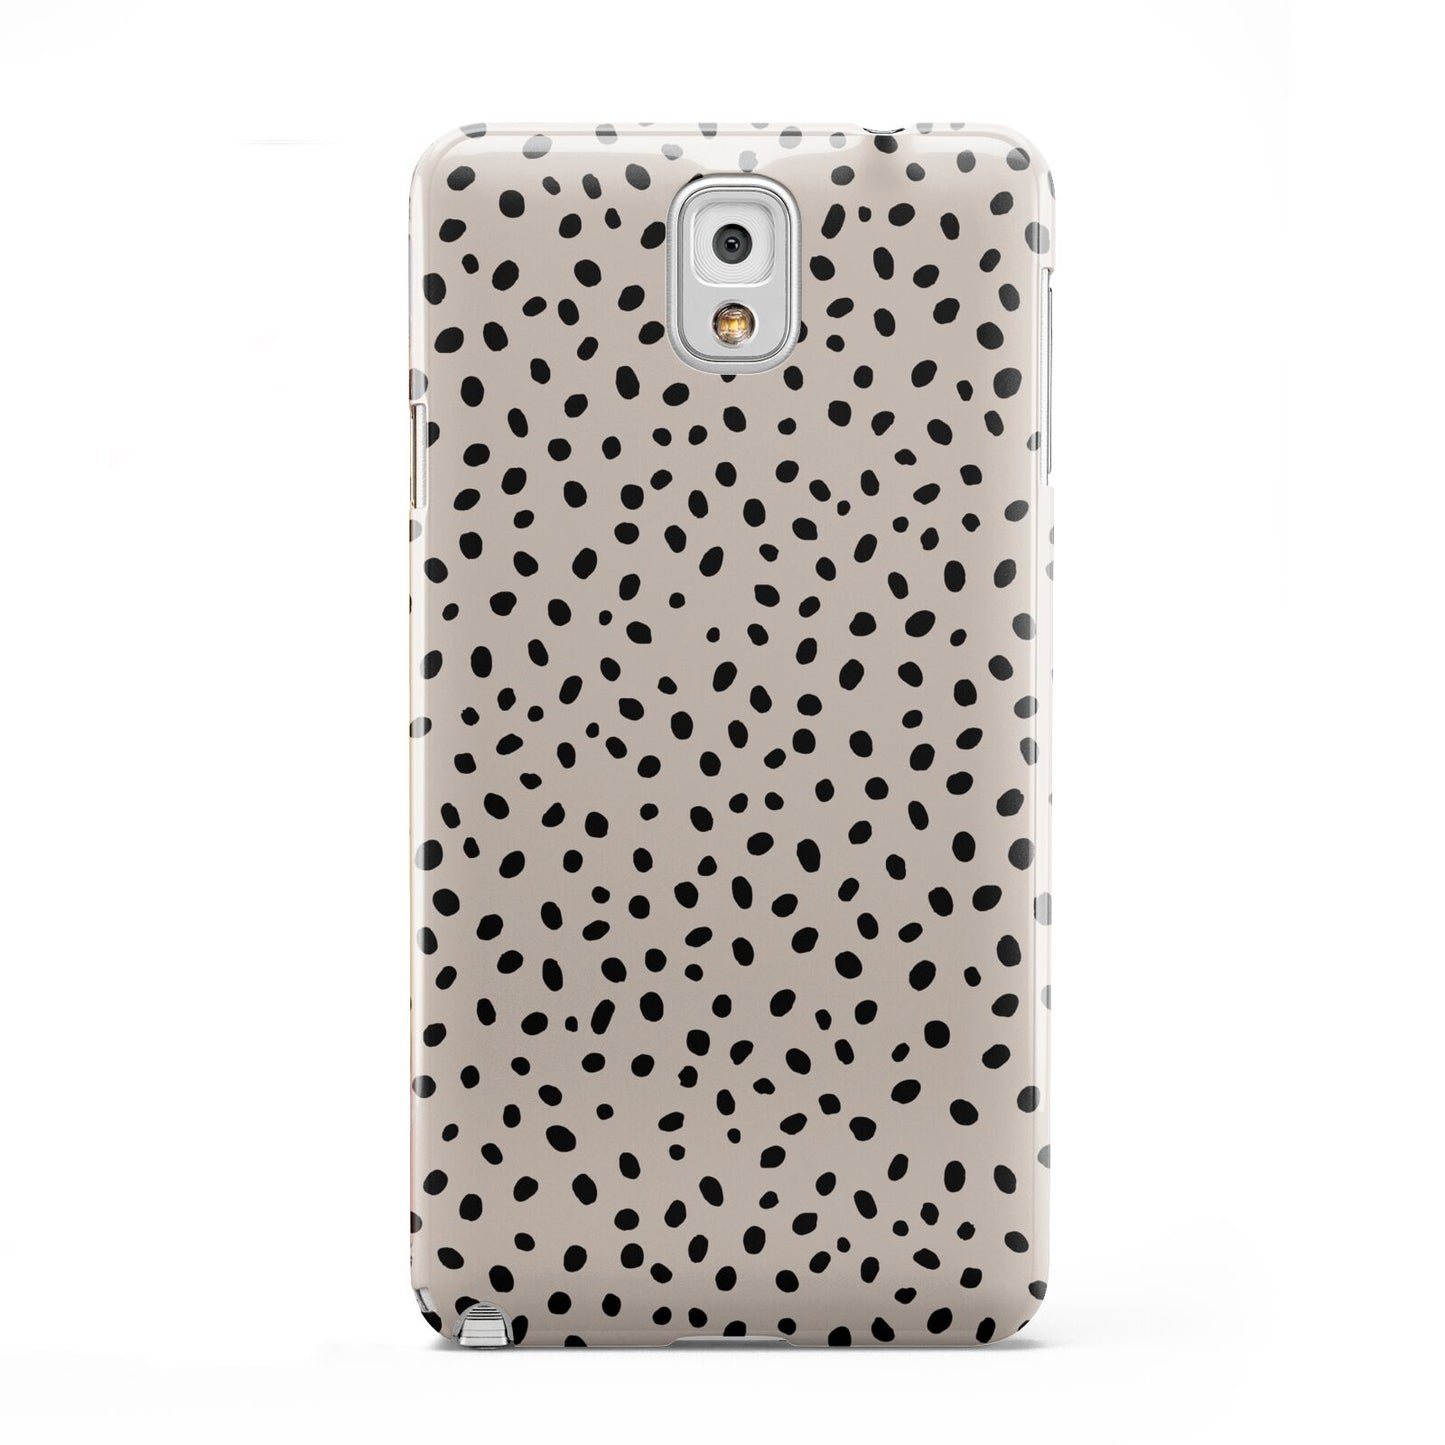 Almond Polka Dot Samsung Galaxy Note 3 Case